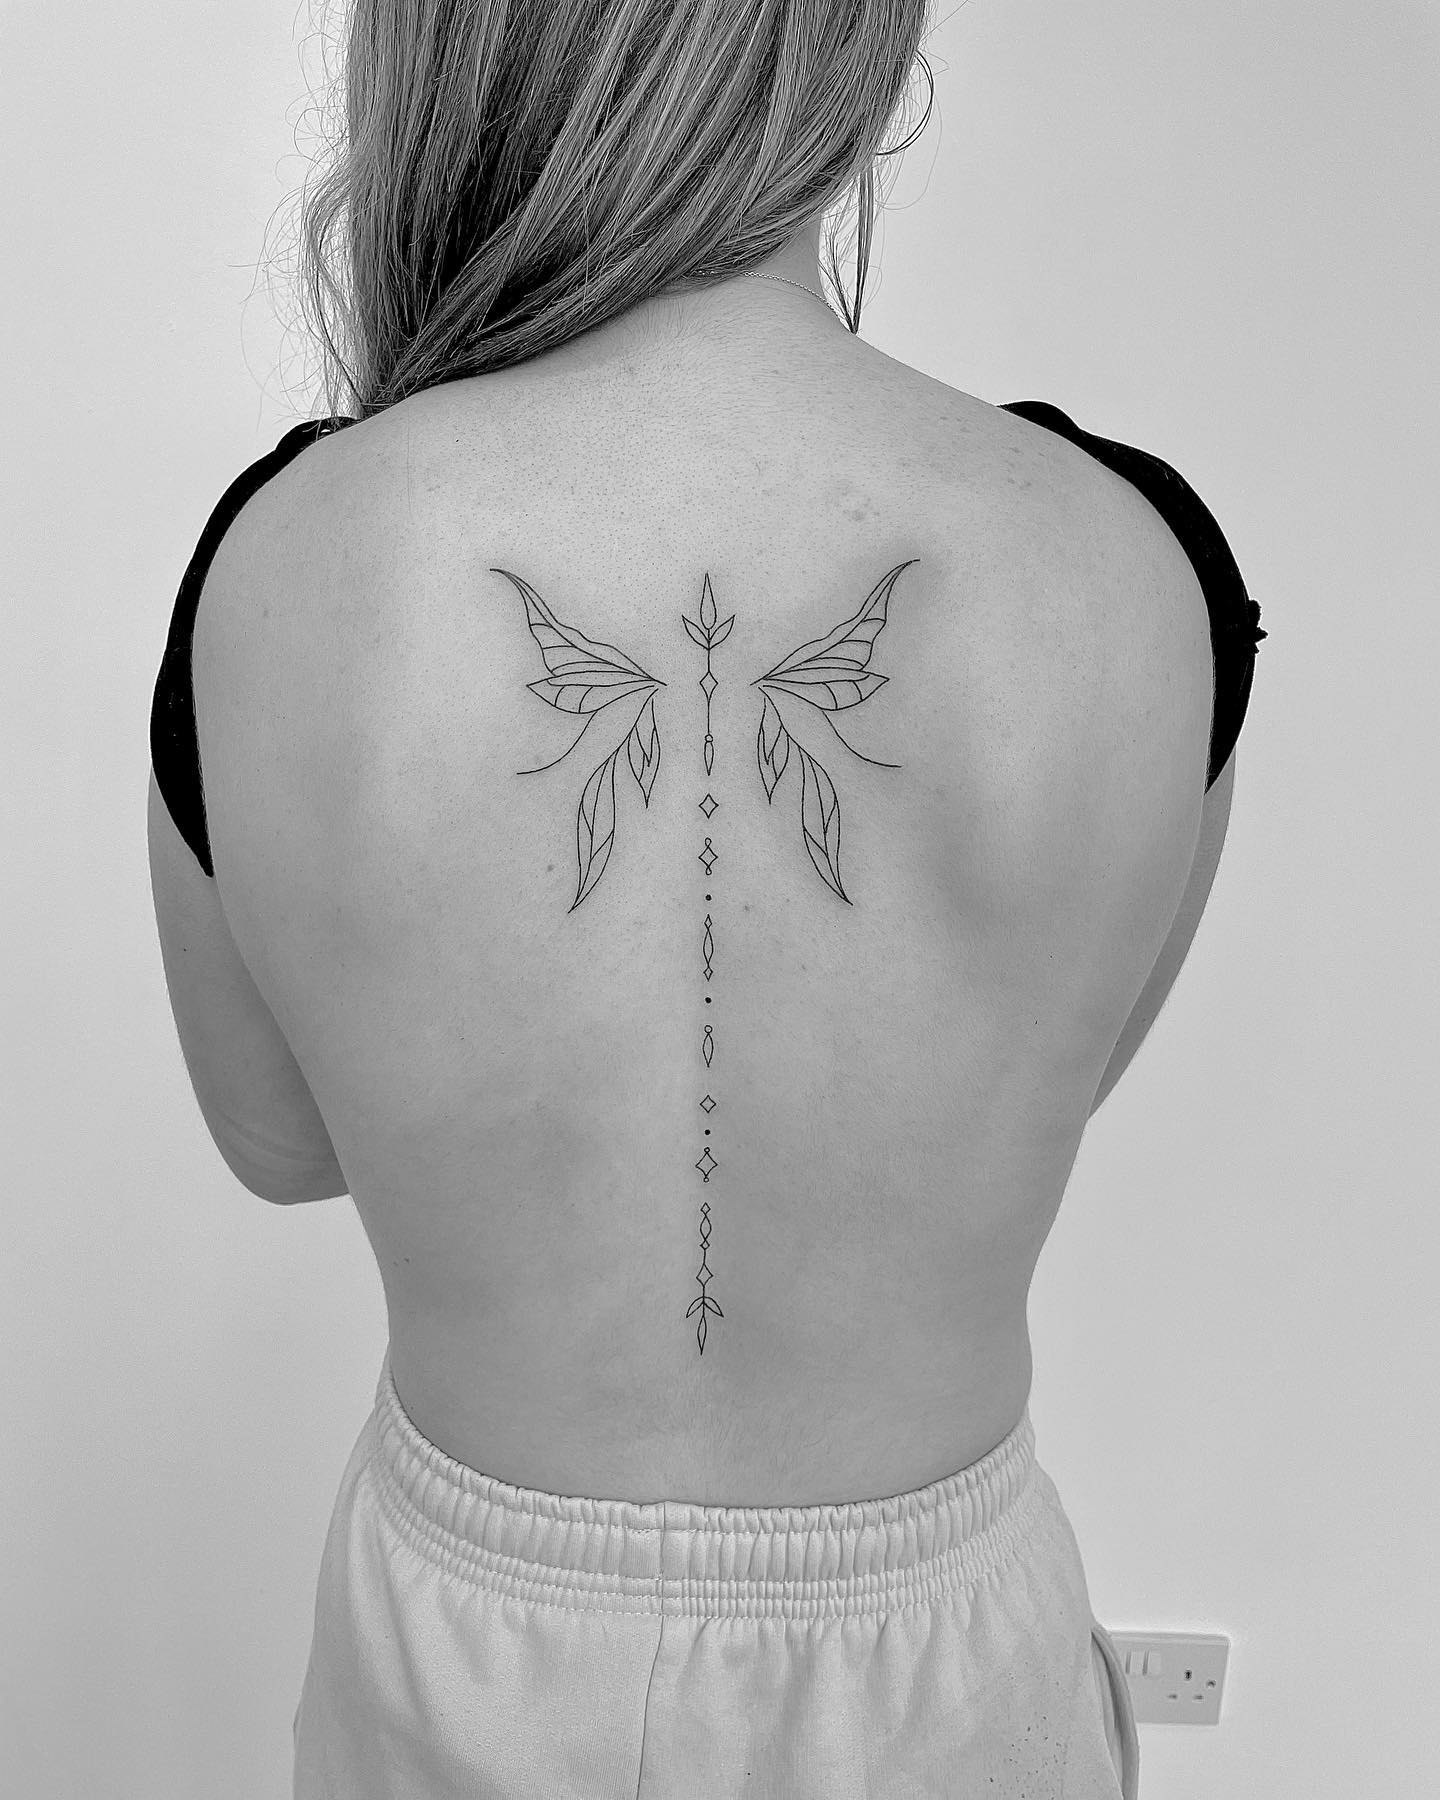 spine tattoo ideas by laurahandstattoo